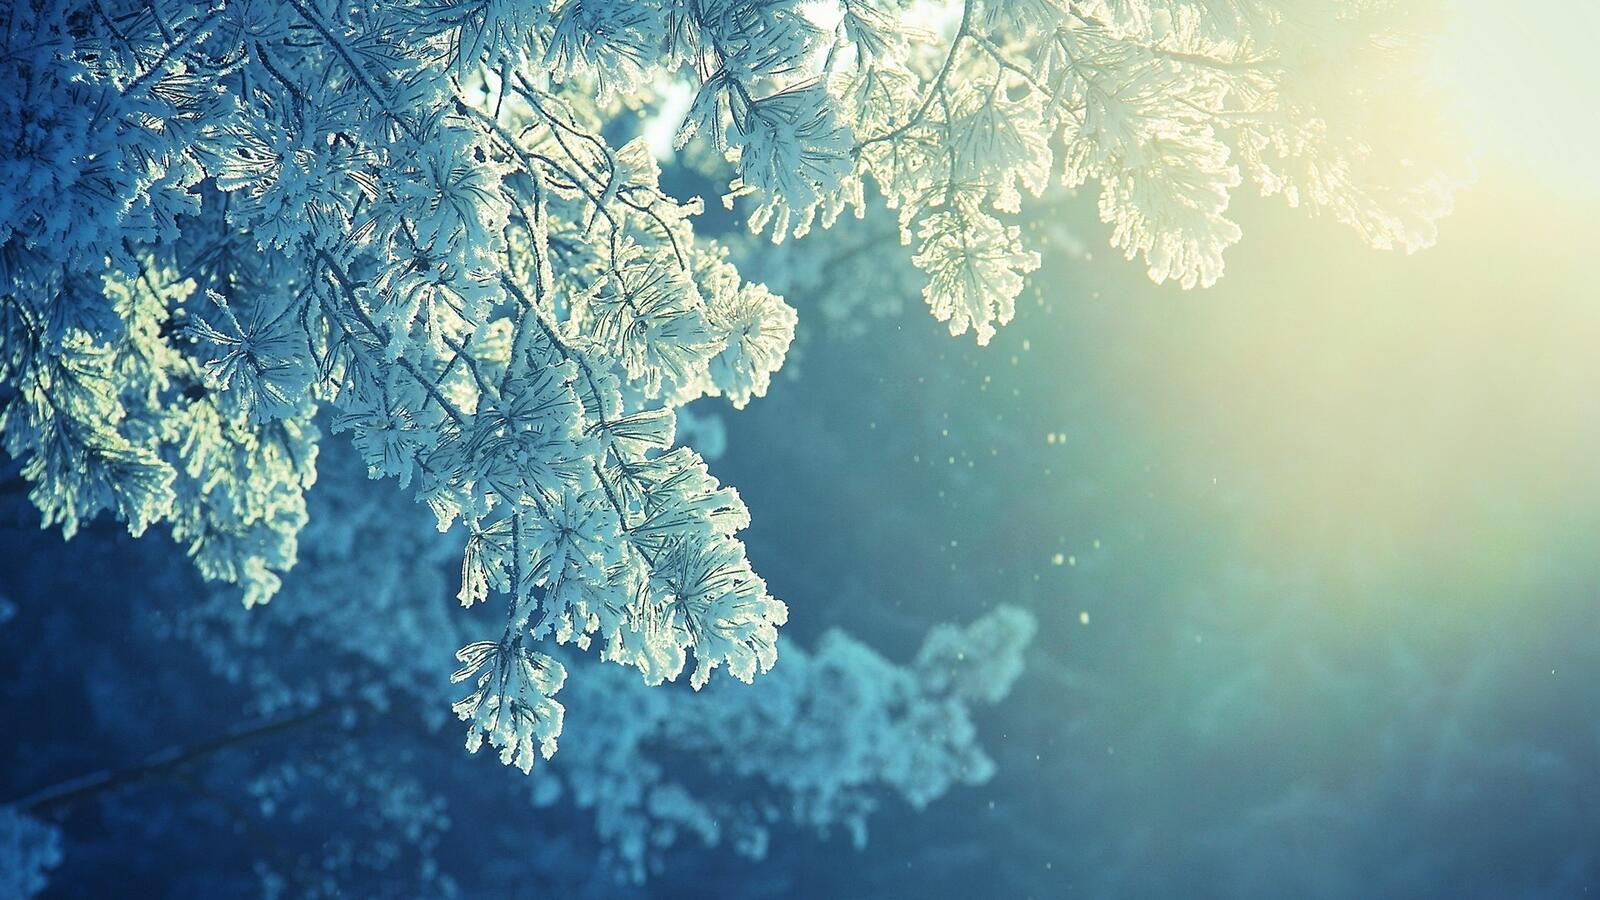 Wallpapers sun light snowflakes frozen on the desktop